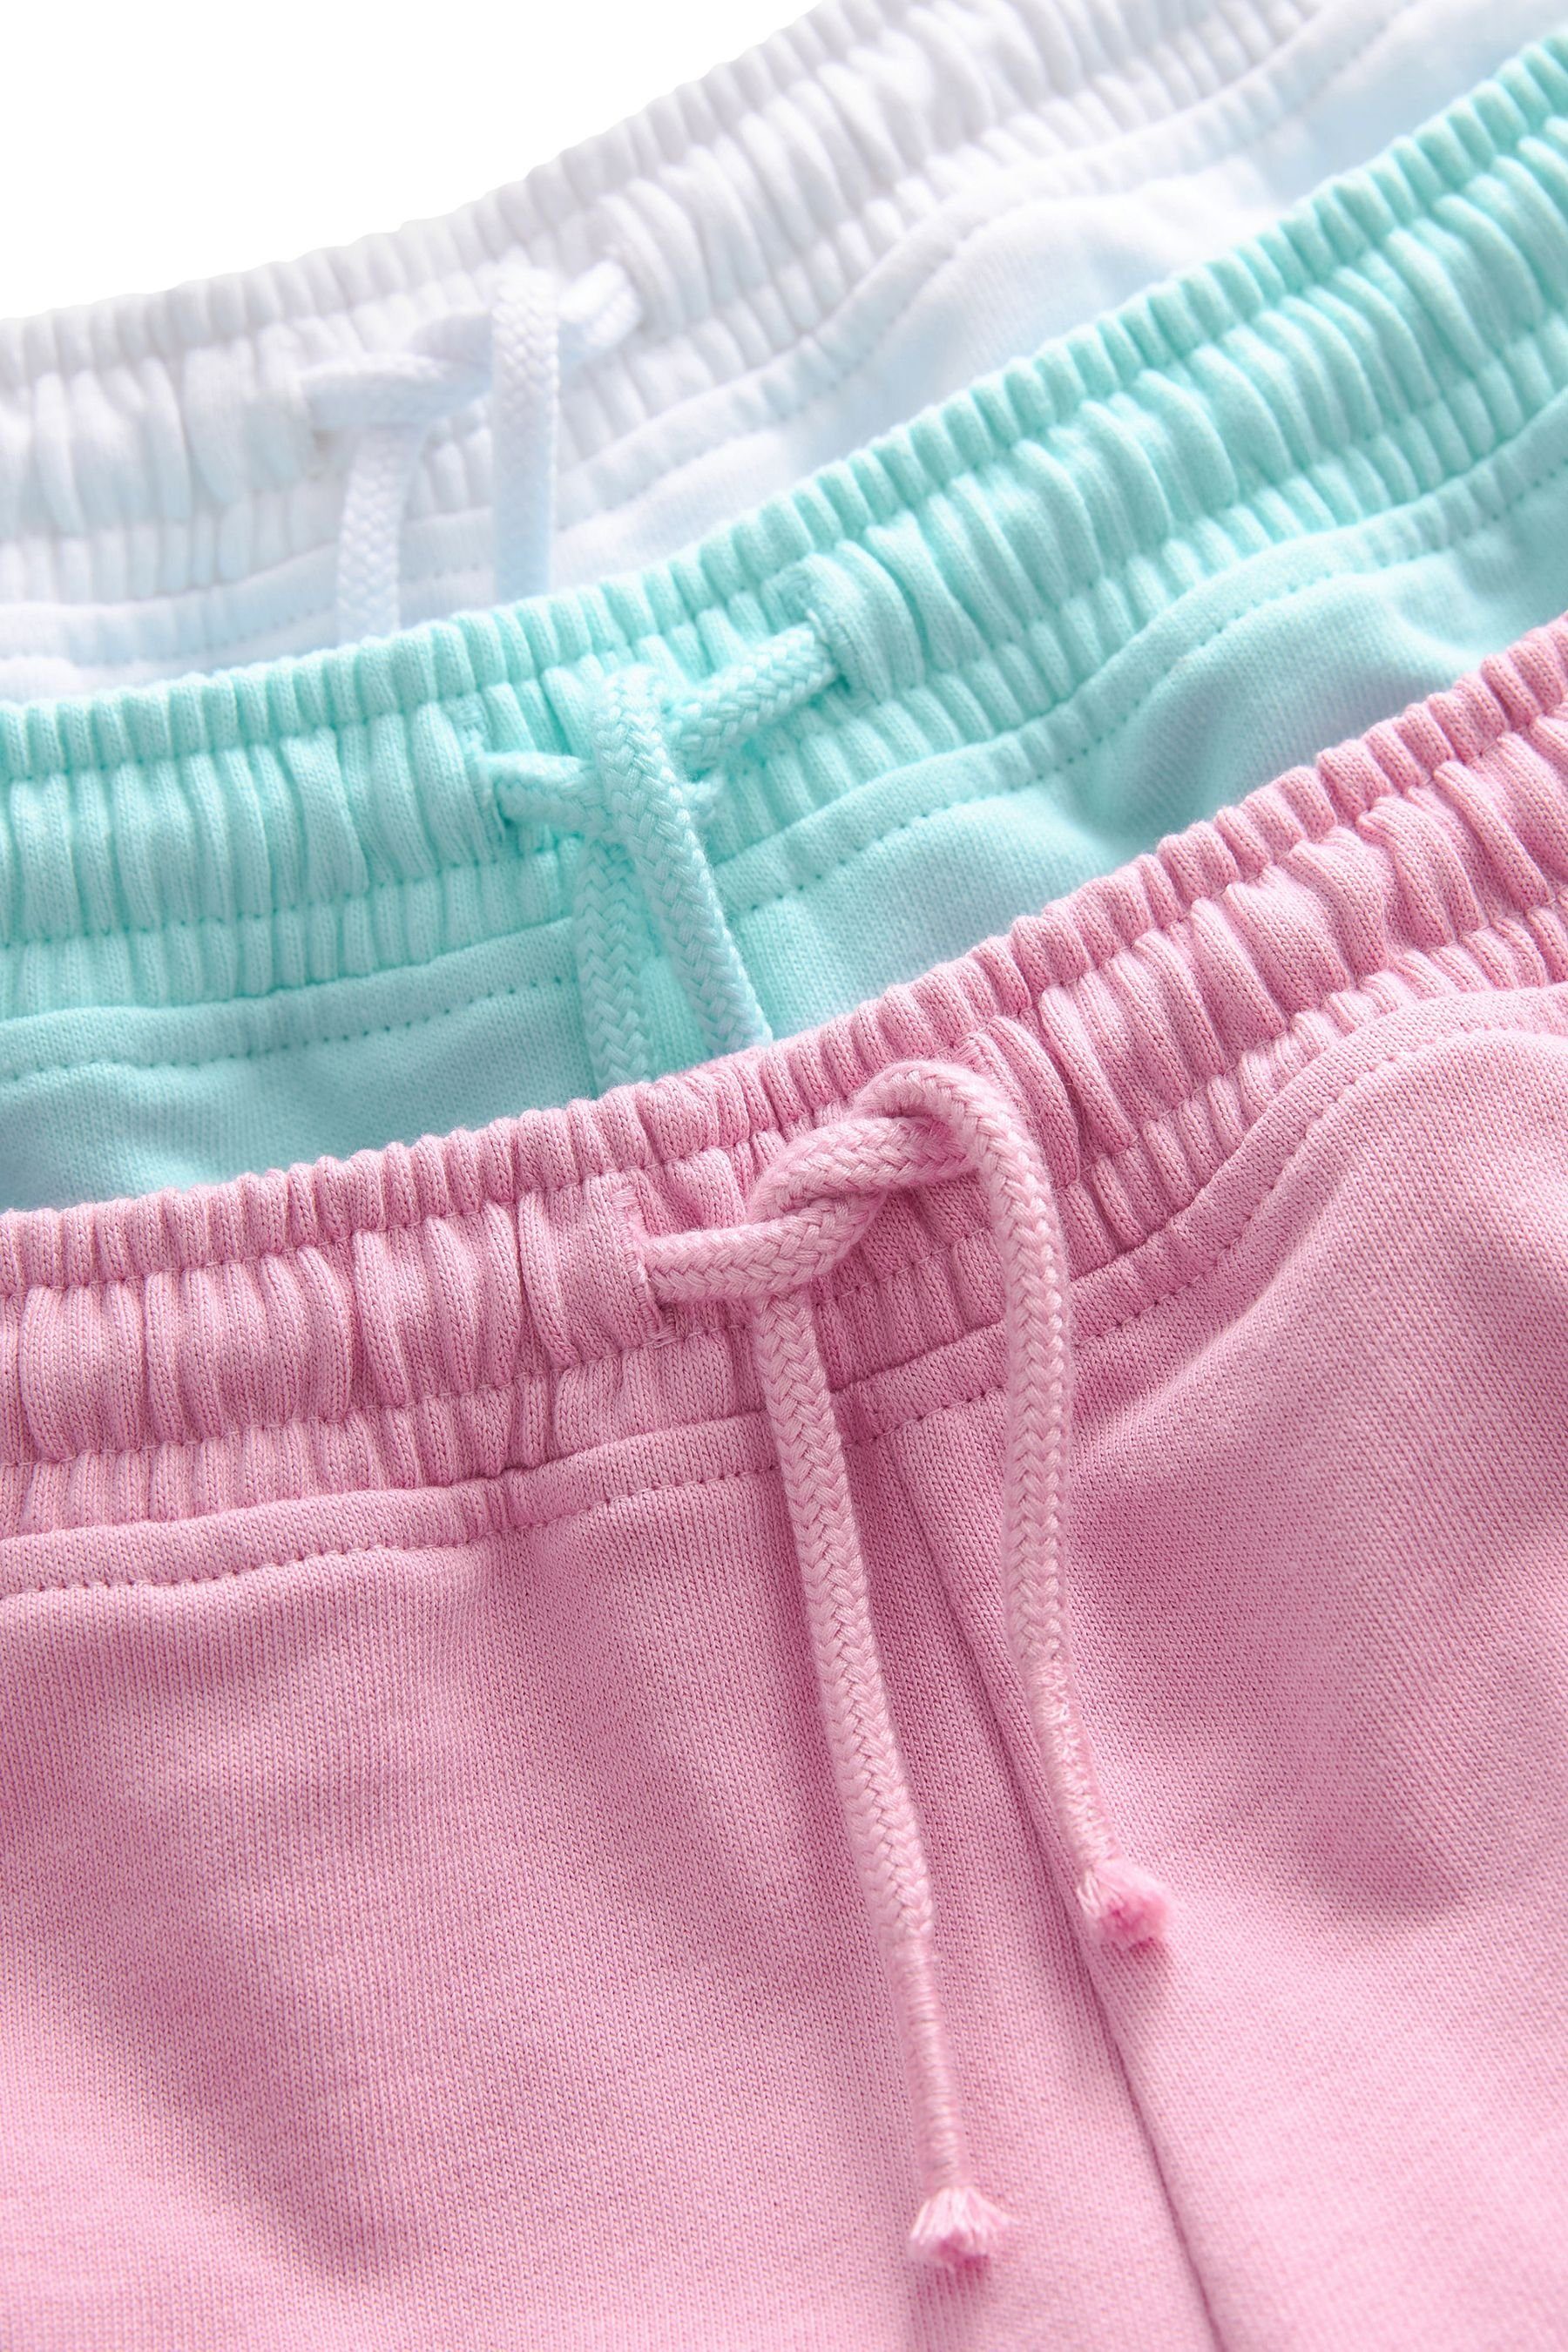 Next Sweatshorts 3er-Pack Shorts (3-tlg) Pastel aus Pink/Mint Green/White Baumwolljersey,